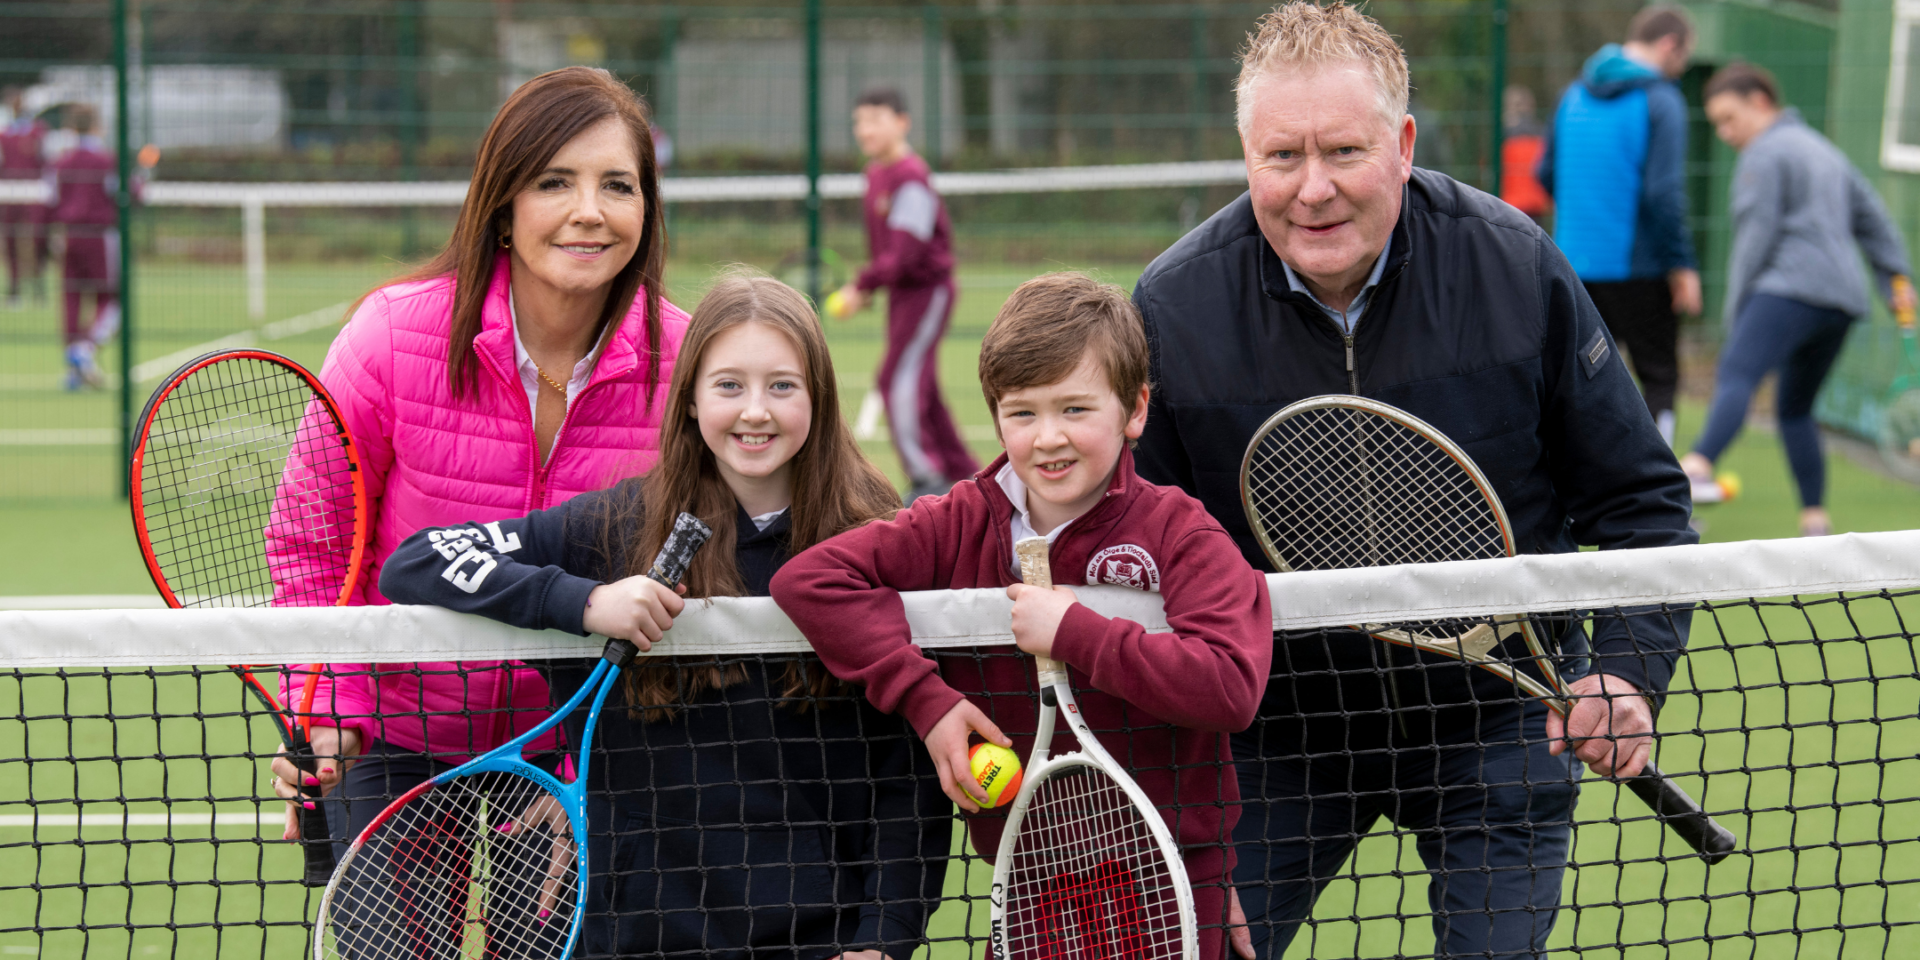 Newcastle West Tennis Club Limerick Sports Funding Community Finance Ireland